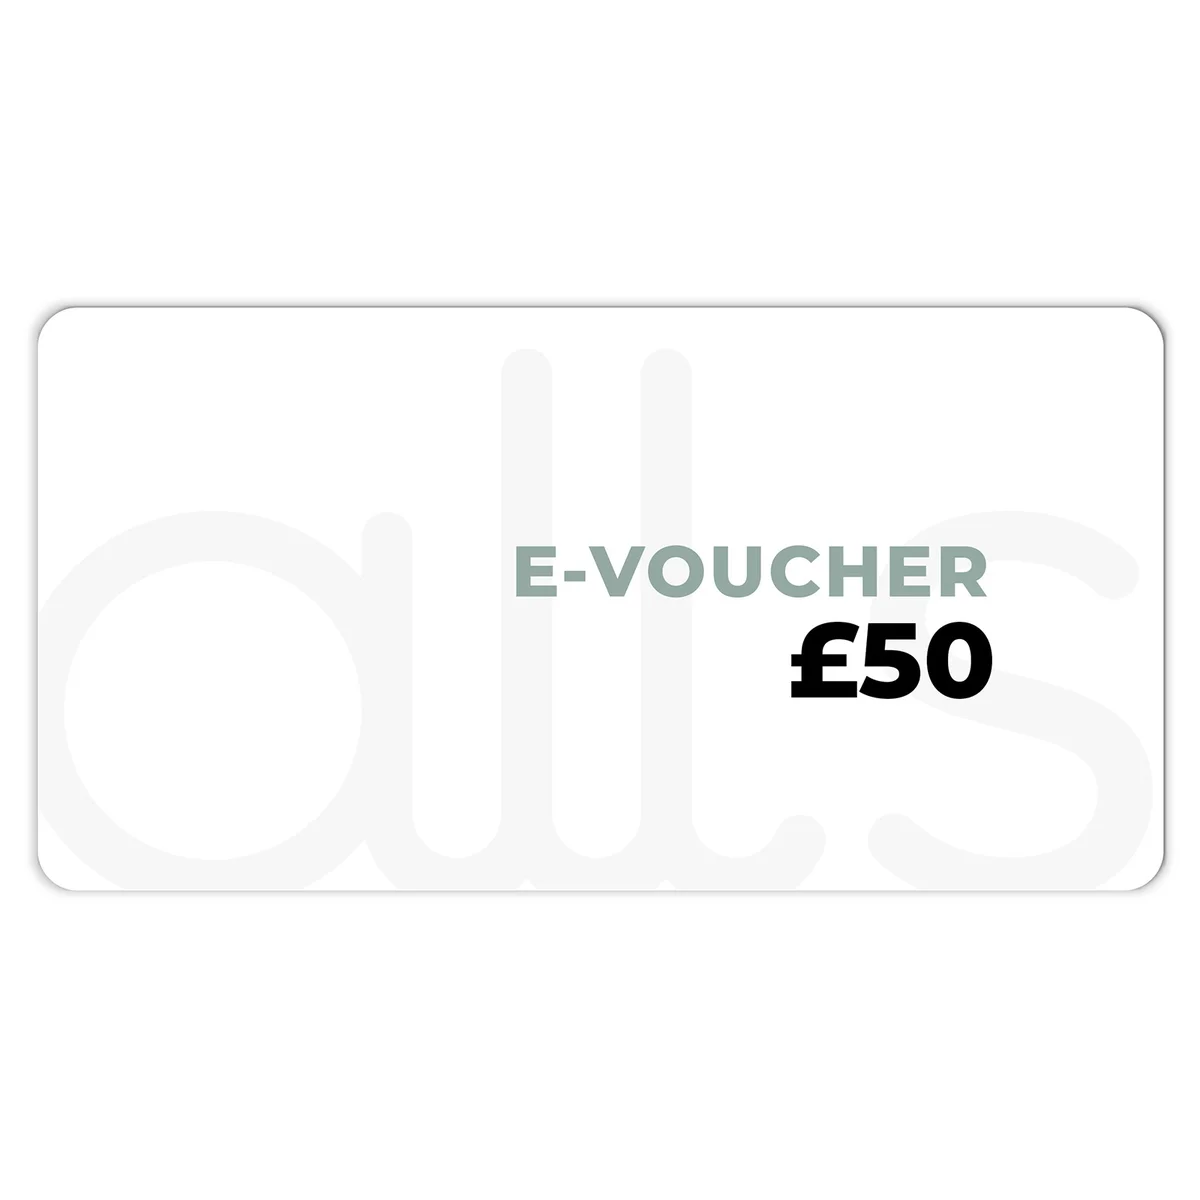 £50 AllSole Gift Voucher Image 1